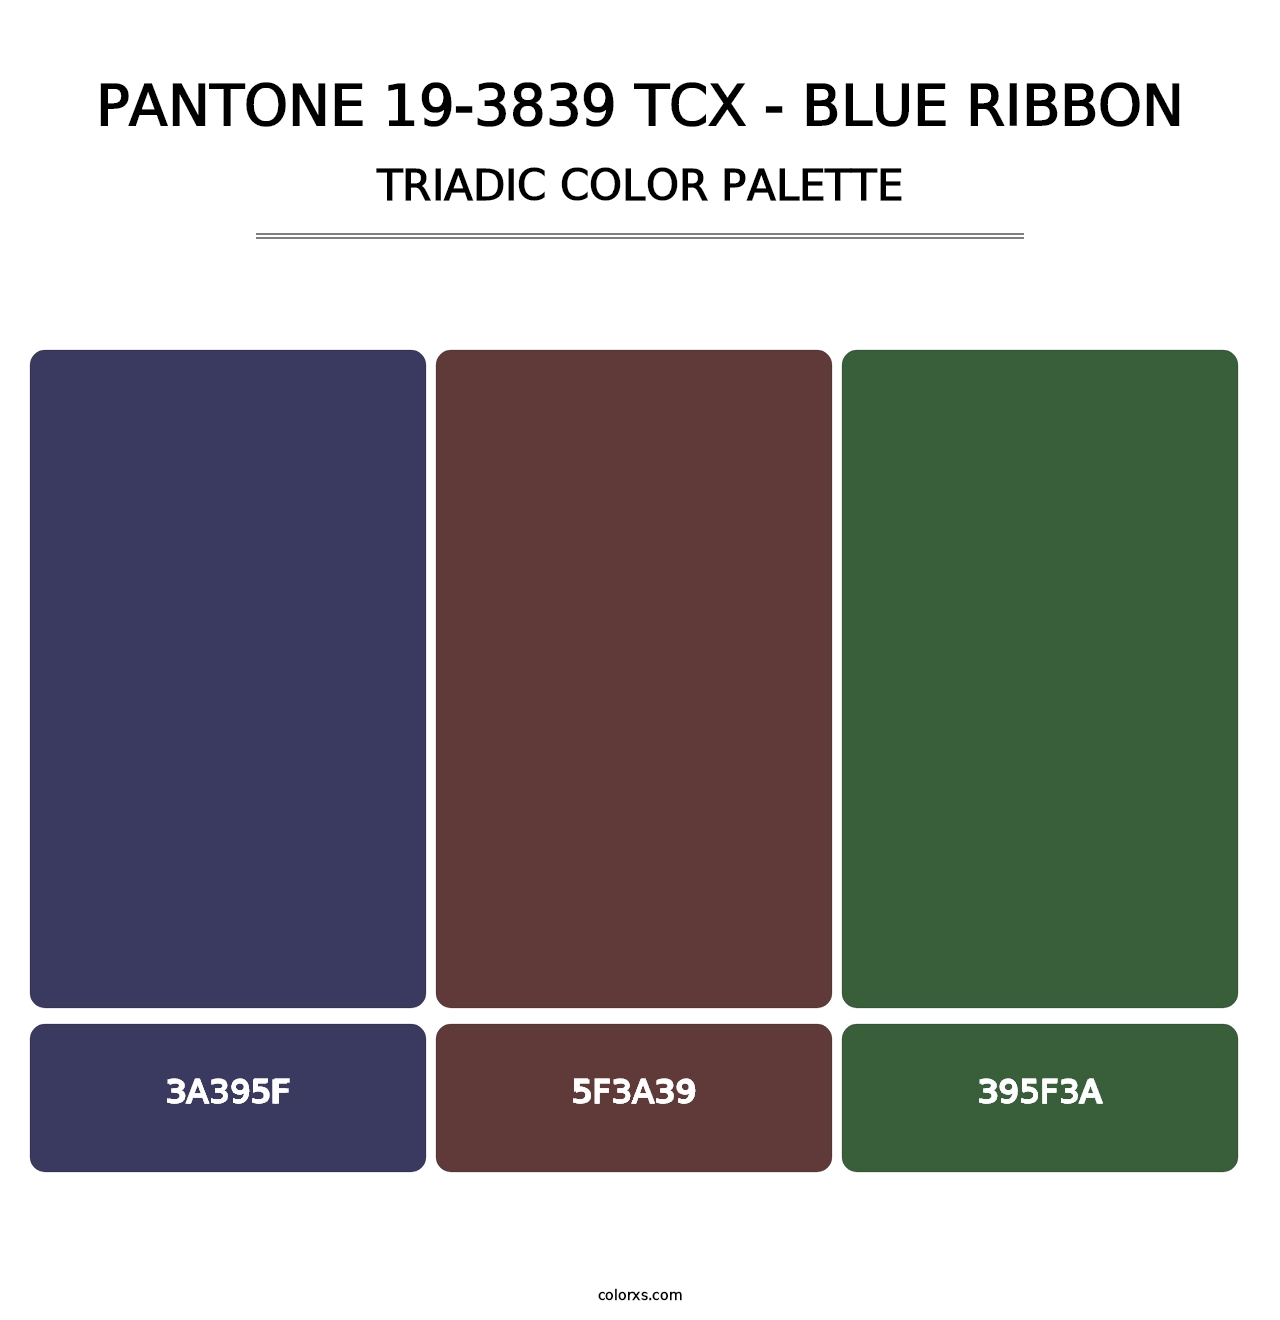 PANTONE 19-3839 TCX - Blue Ribbon - Triadic Color Palette